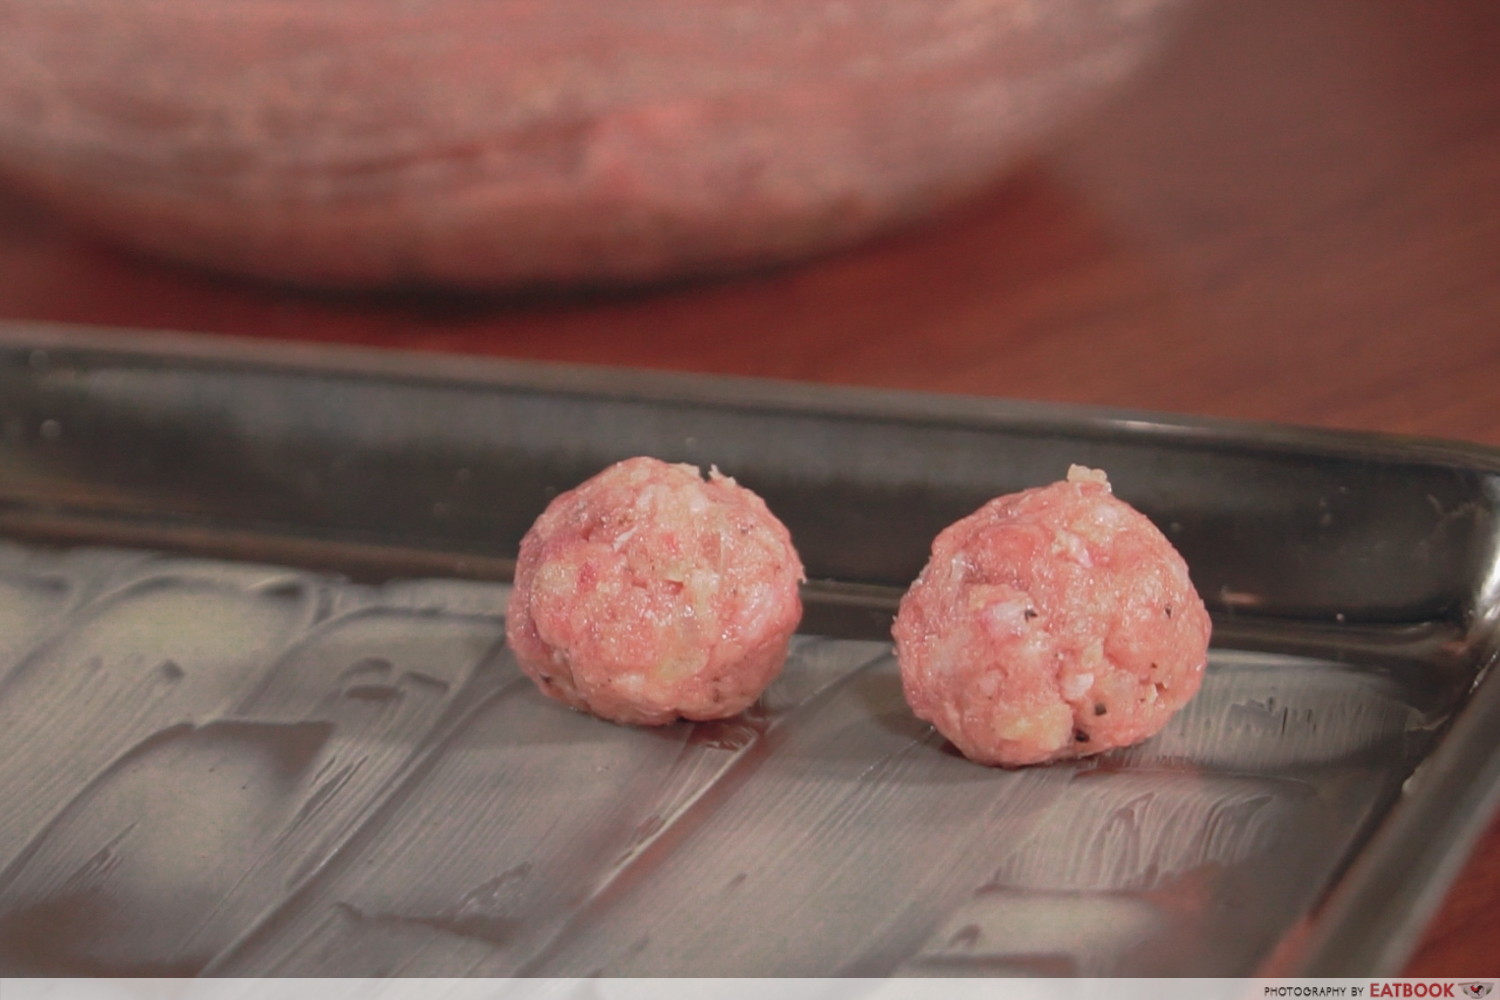 IKEA Meatballs recipe - Roll meatballs